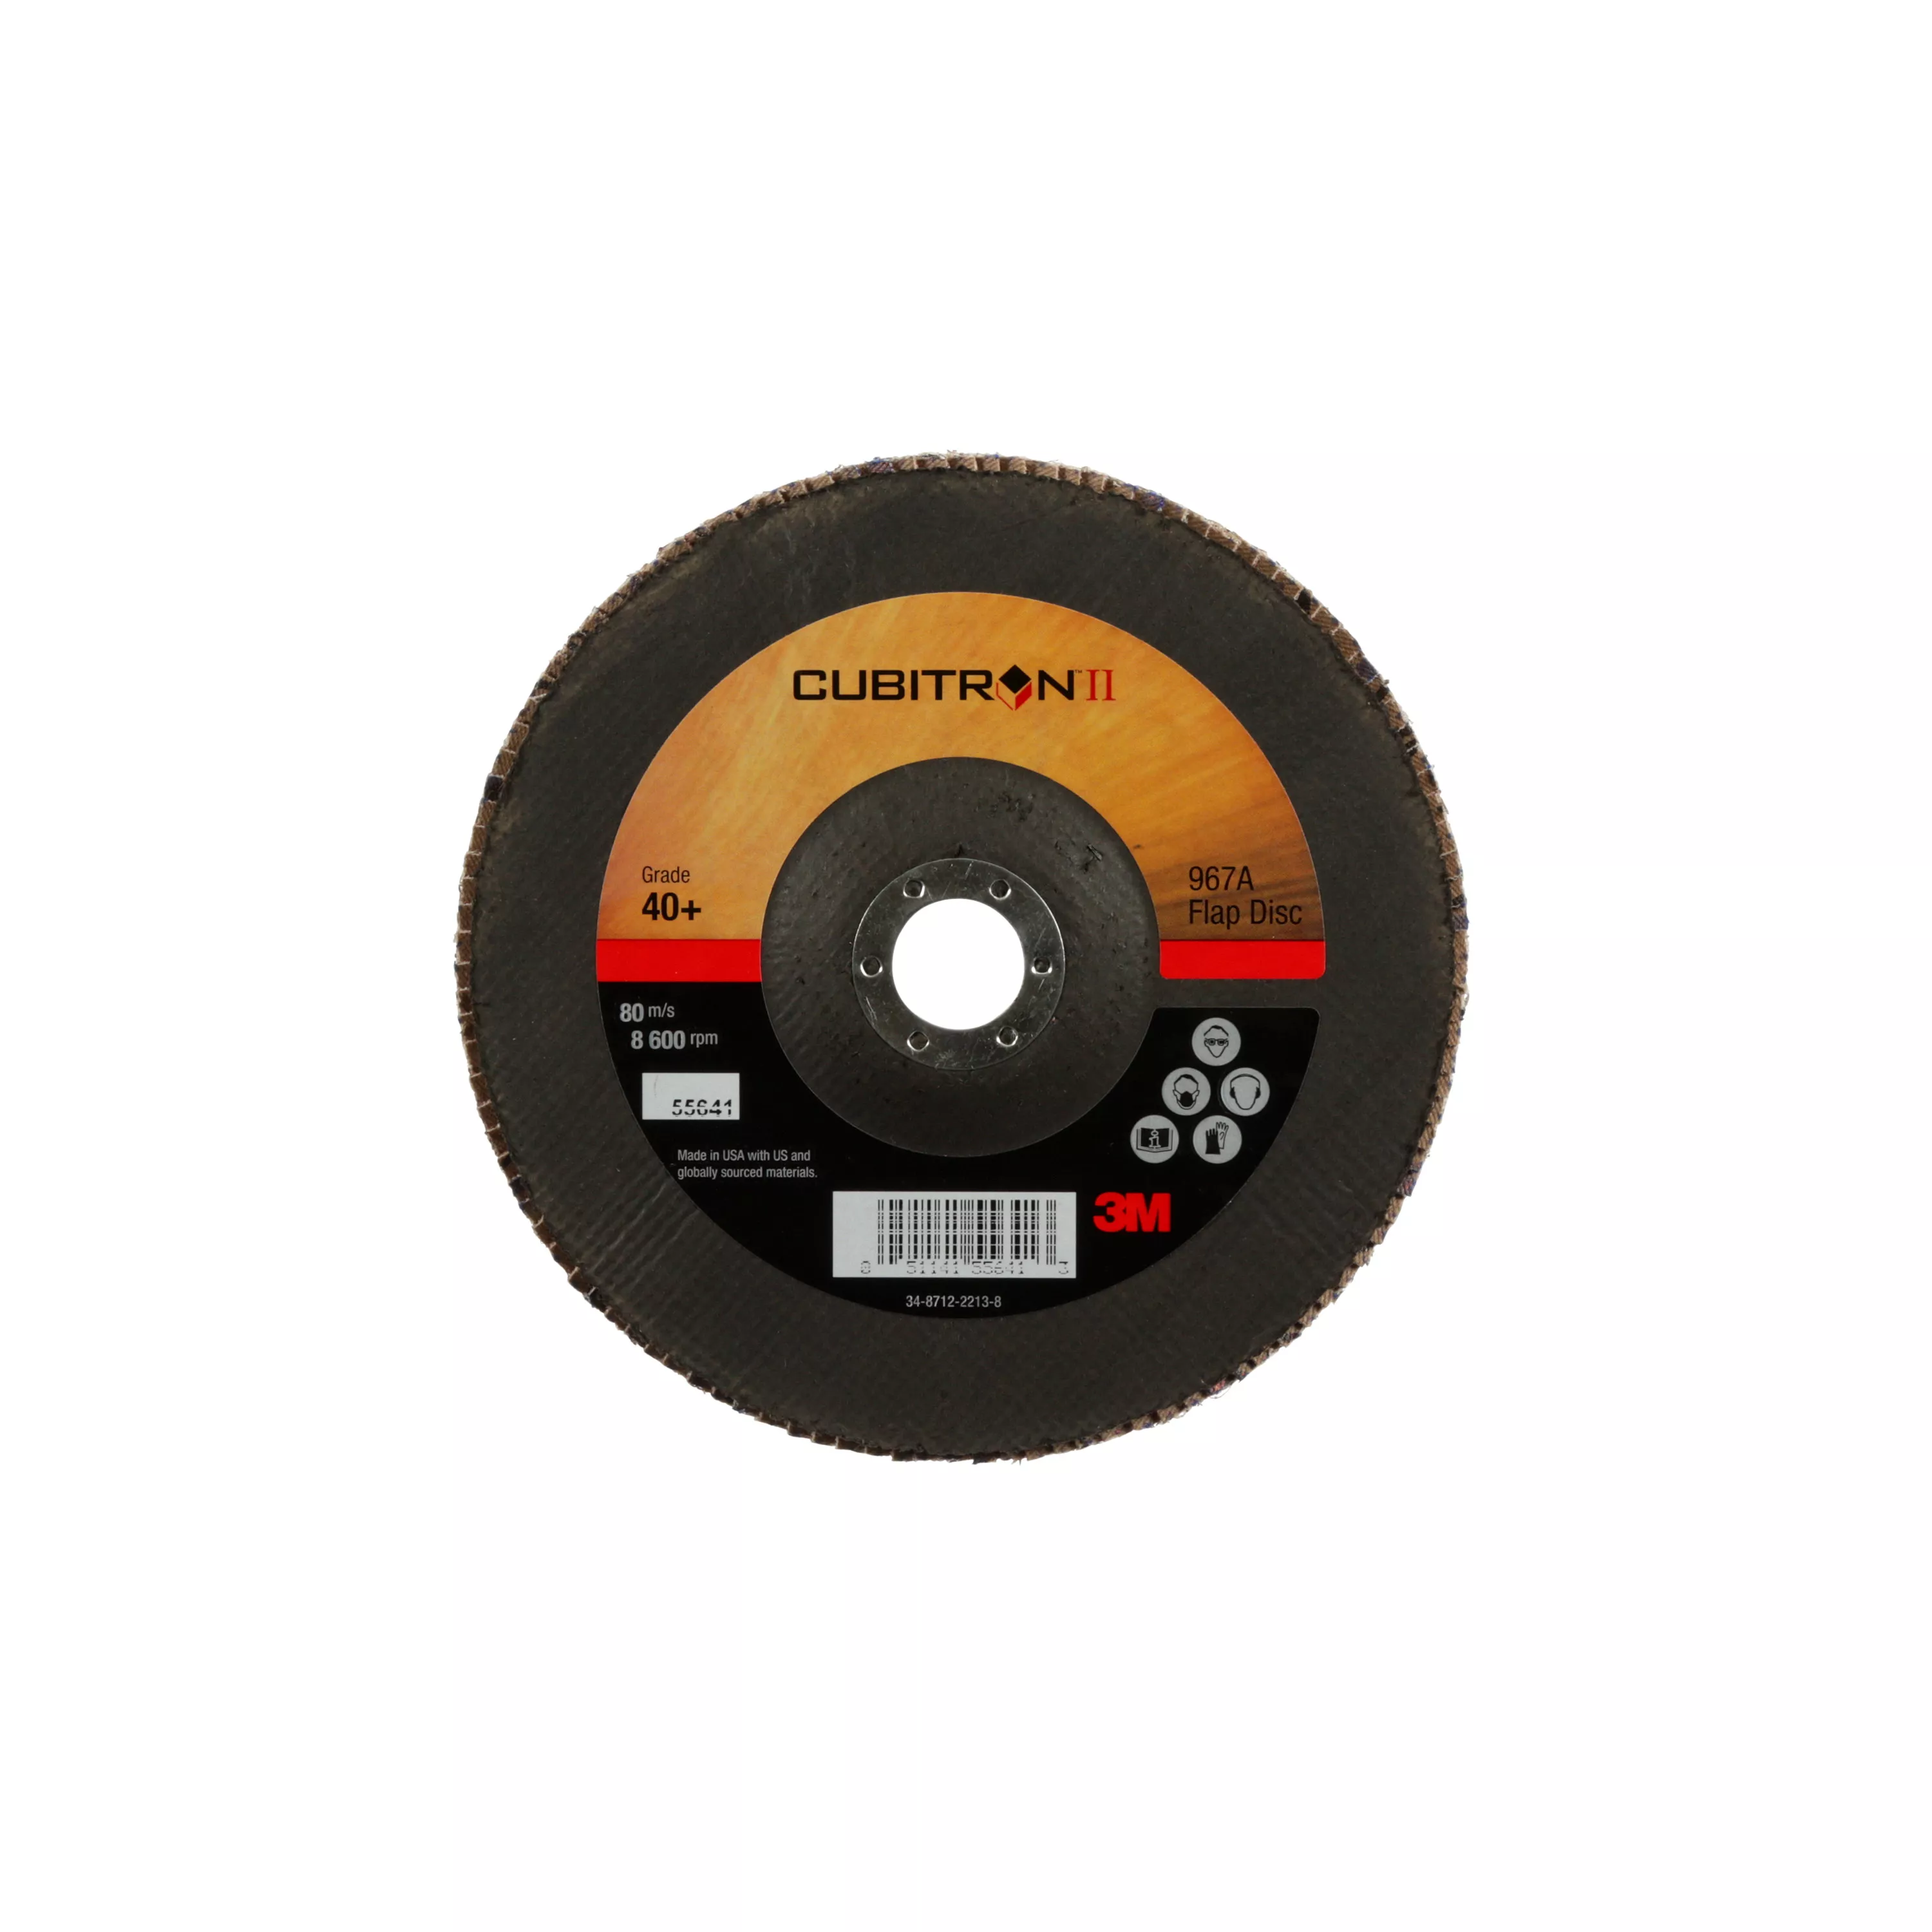 SKU 7010300290 | 3M™ Cubitron™ II Flap Disc 967A